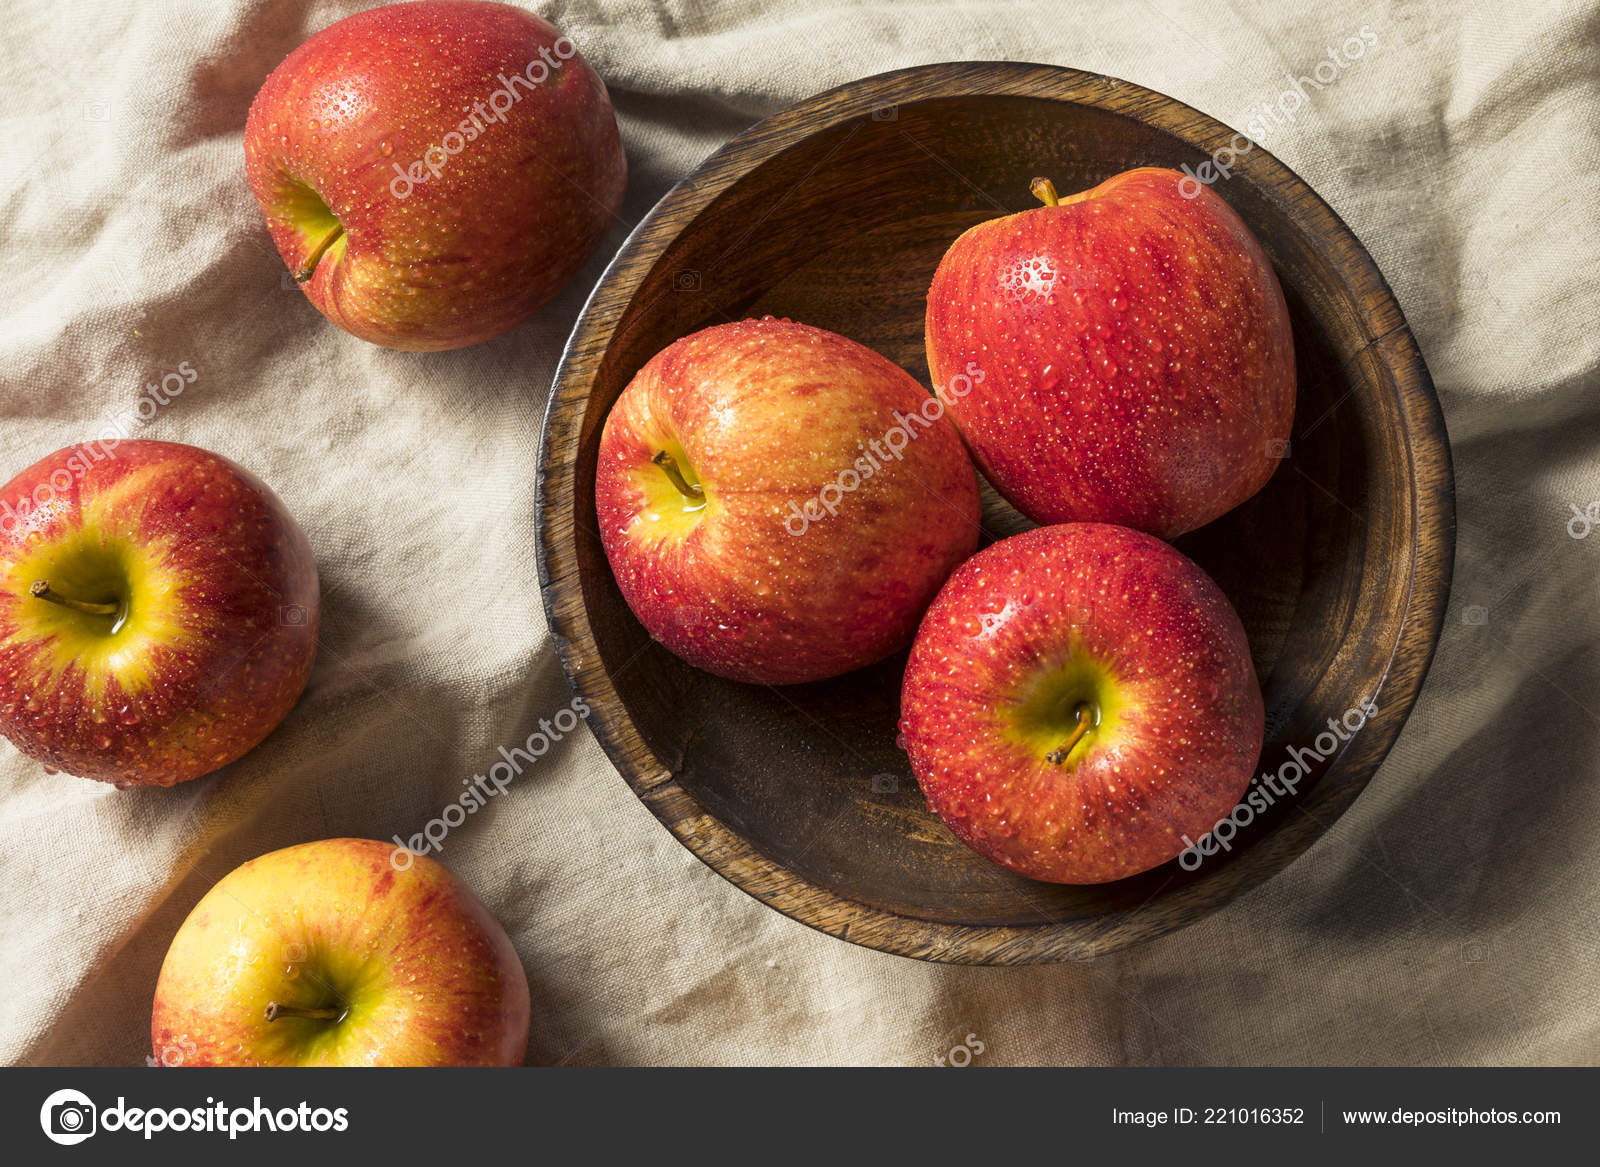 https://st4.depositphotos.com/1692343/22101/i/1600/depositphotos_221016352-stock-photo-raw-red-organic-envy-apples.jpg